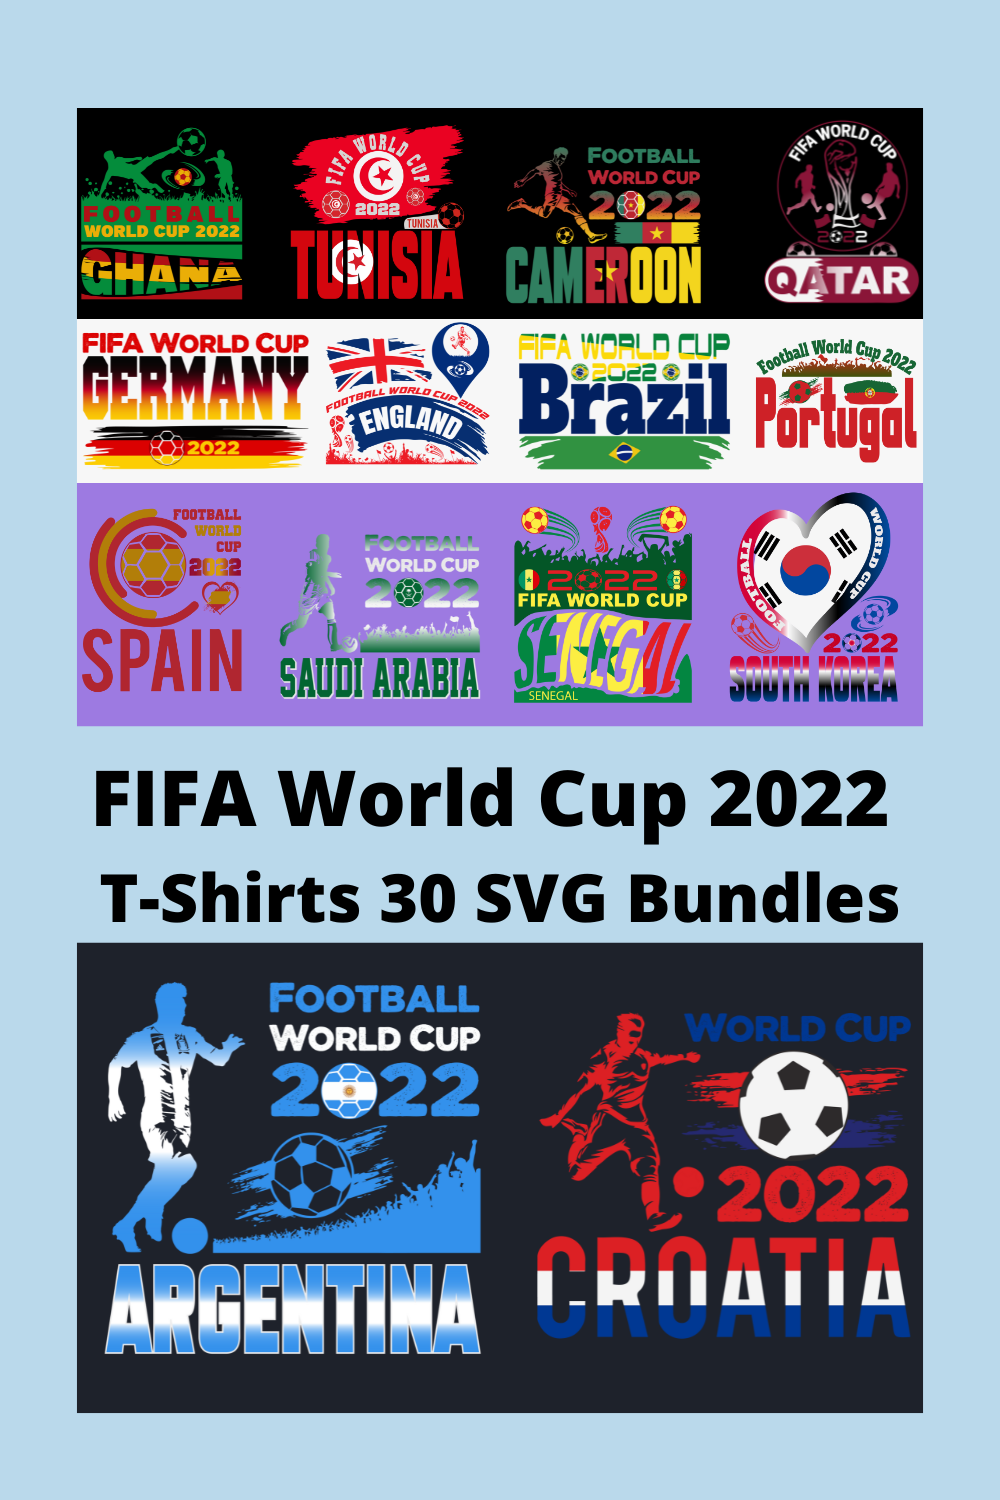 FIFA World Cup 2022 T-Shirts Desing 30 SVG Bundles pinterest image.